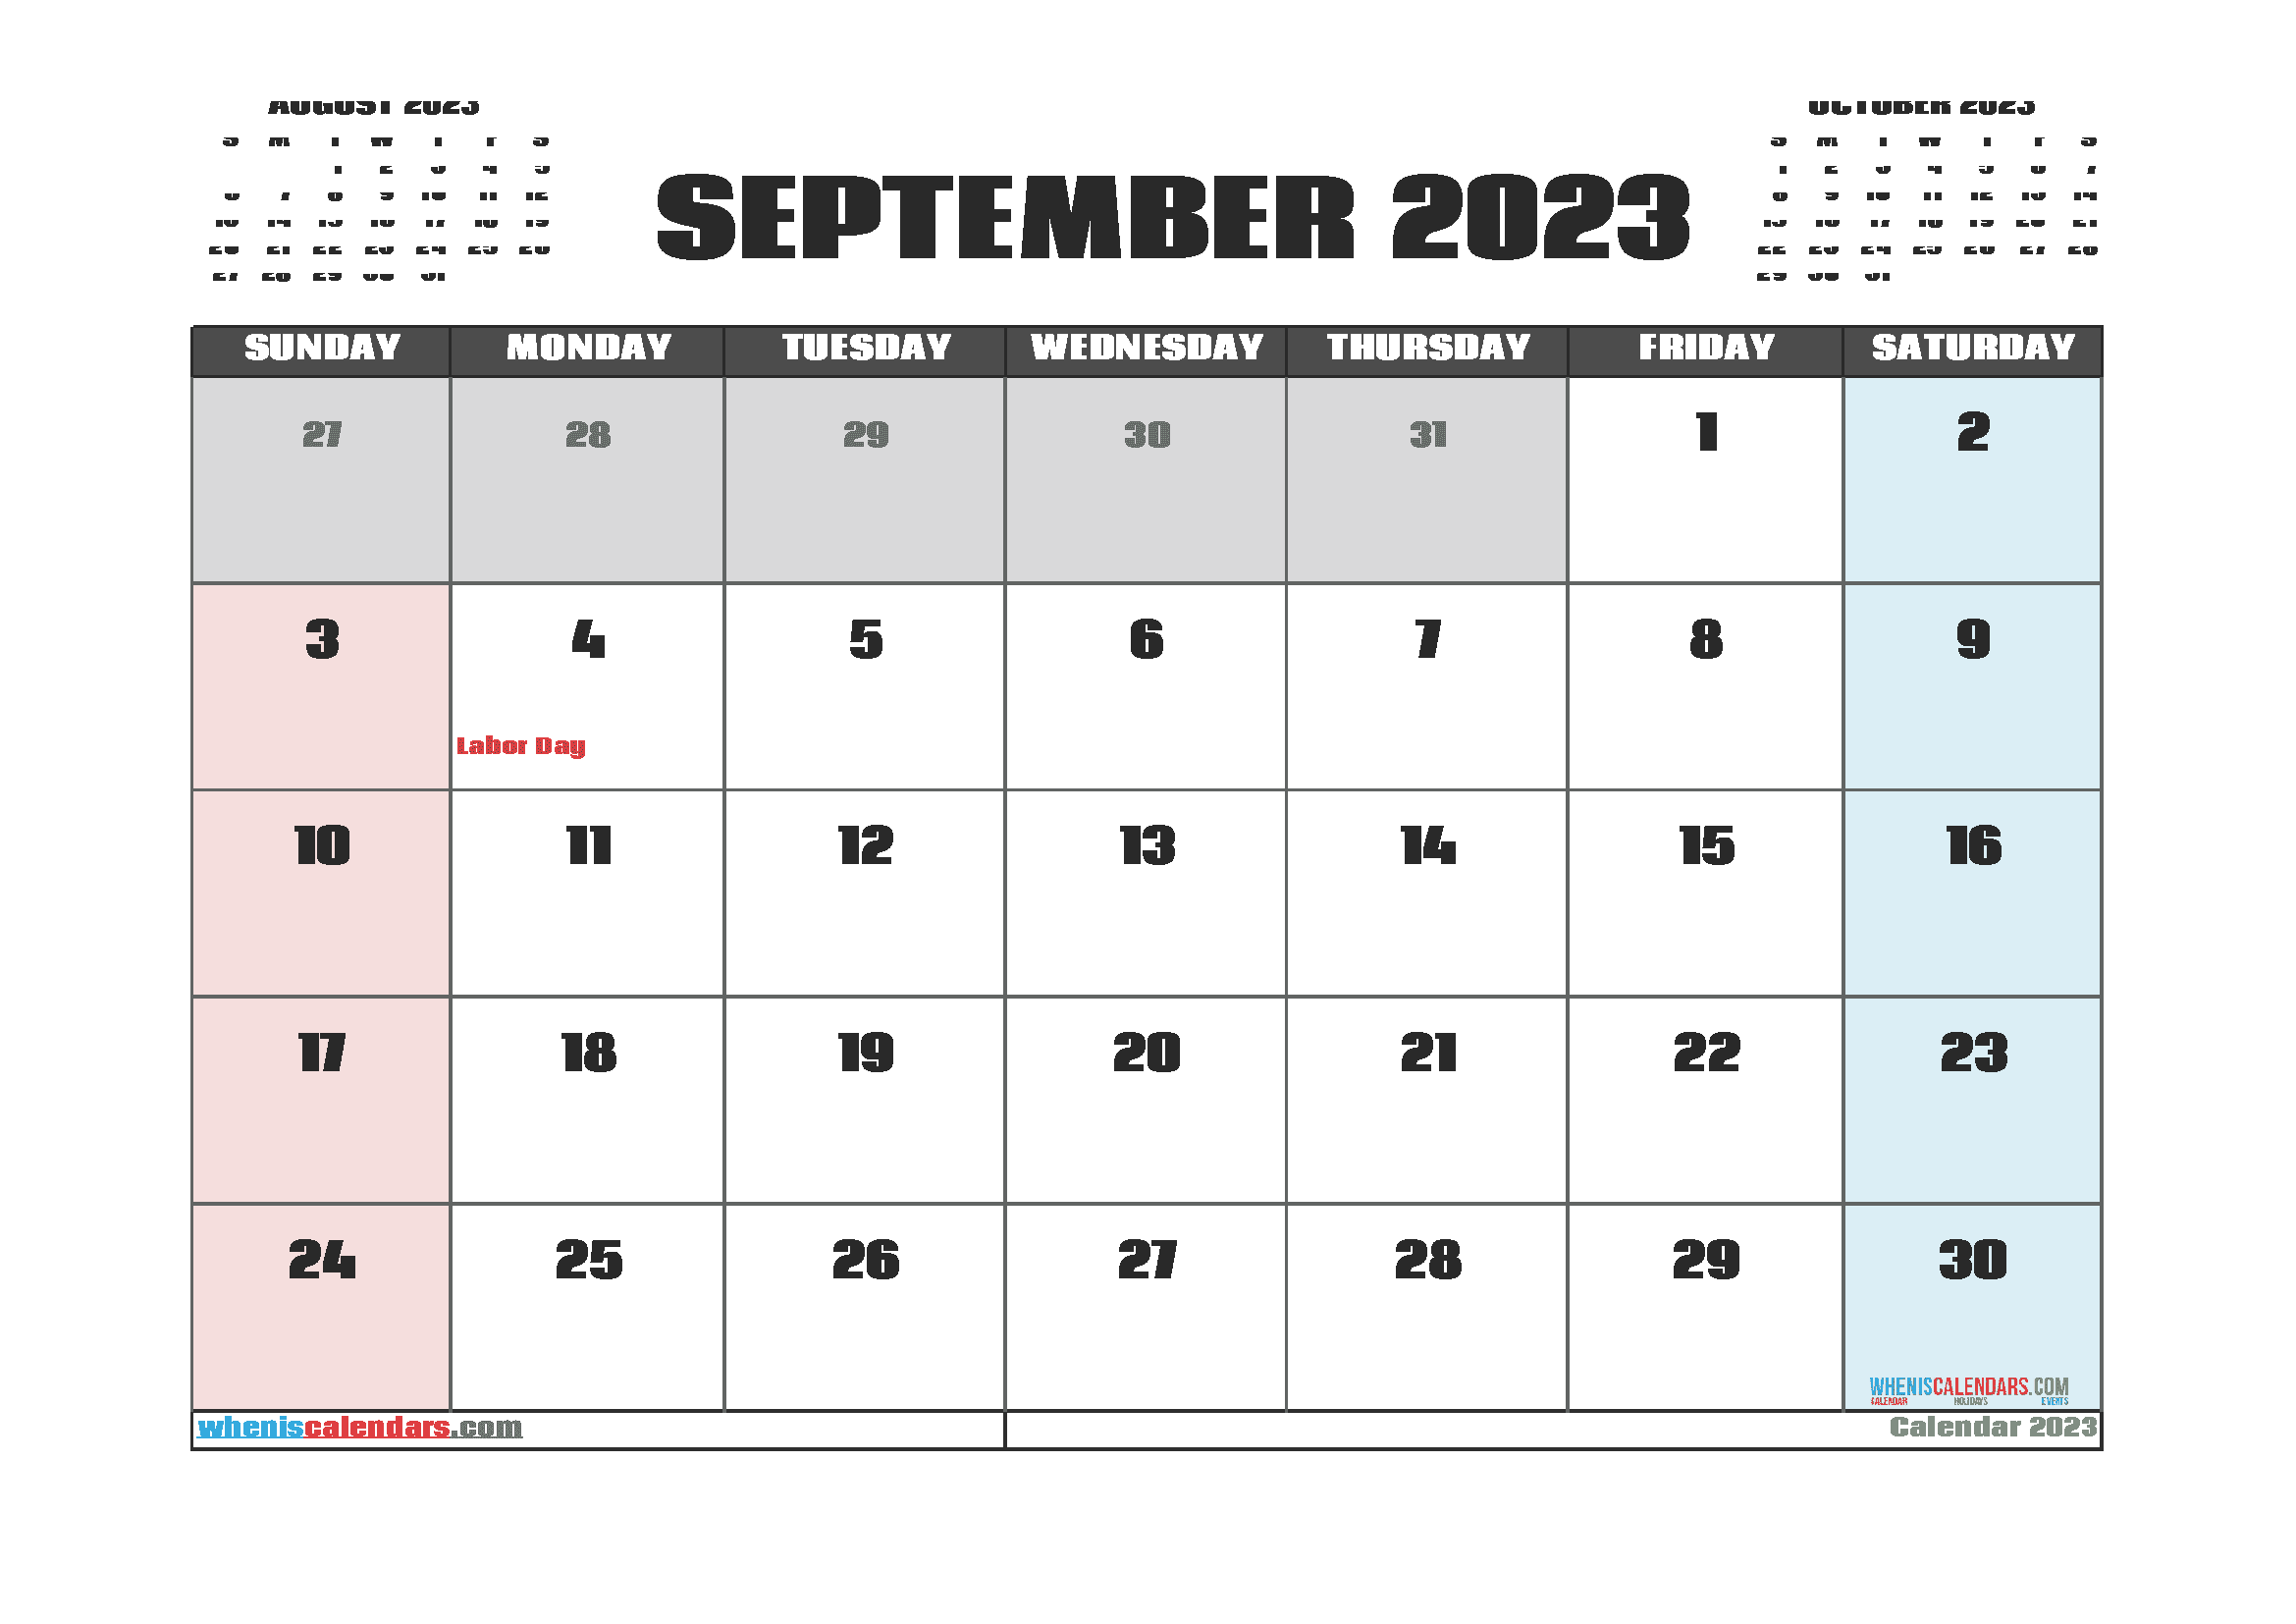 Free Printable September 2023 Calendar with Holidays PDF in Landscape